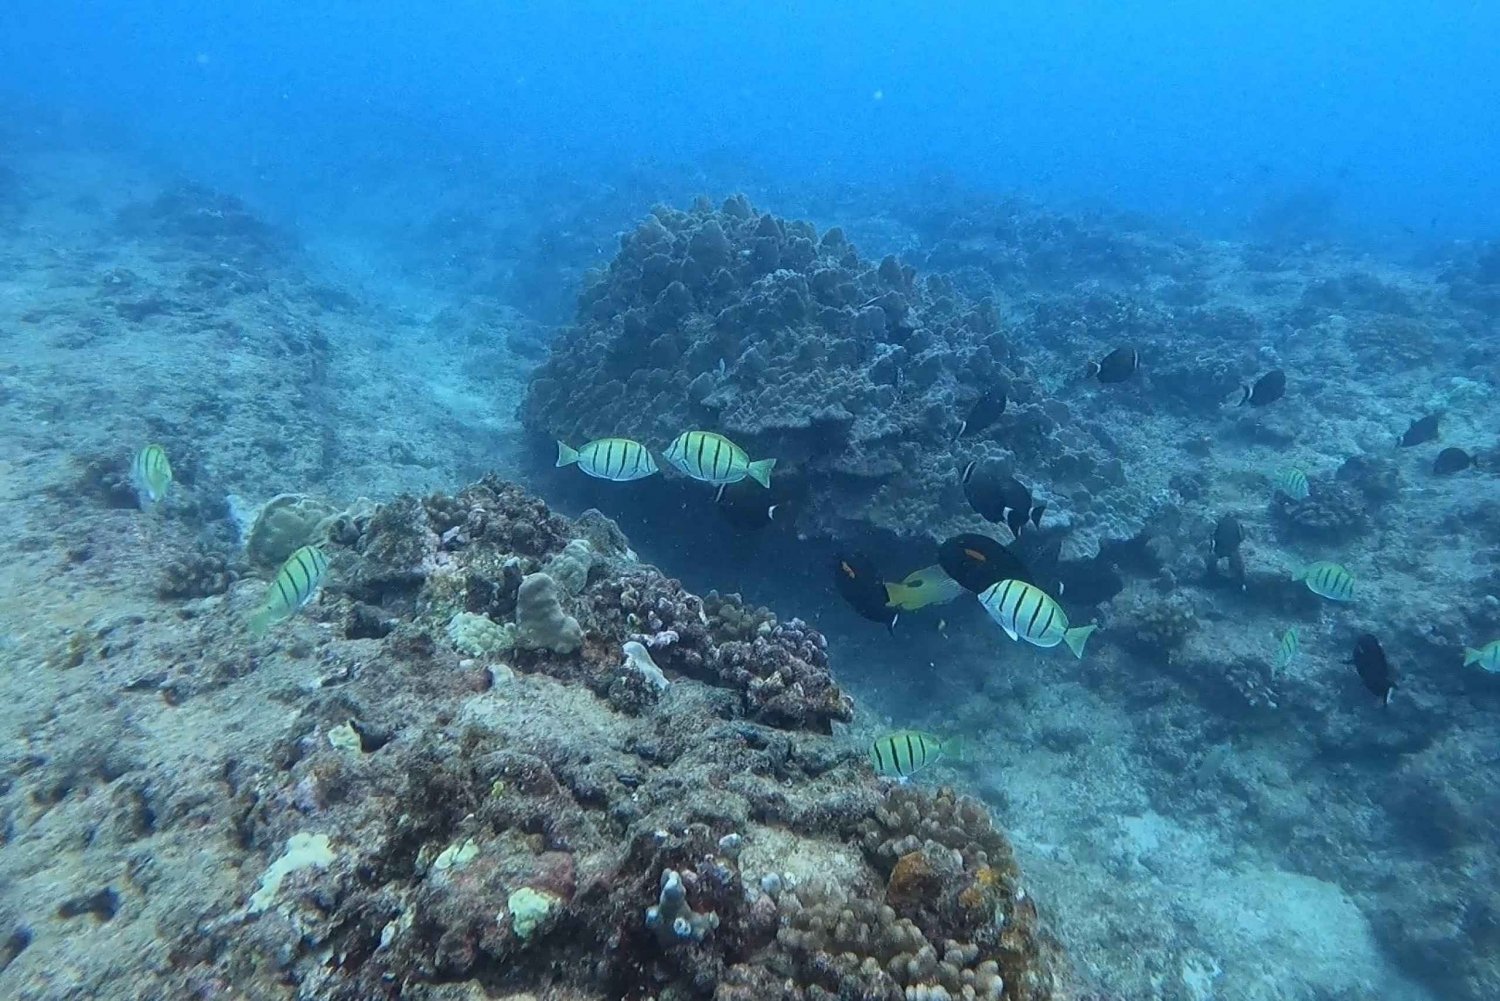 Oahu: Honolulu Beginner Scuba Diving Tour with Videos